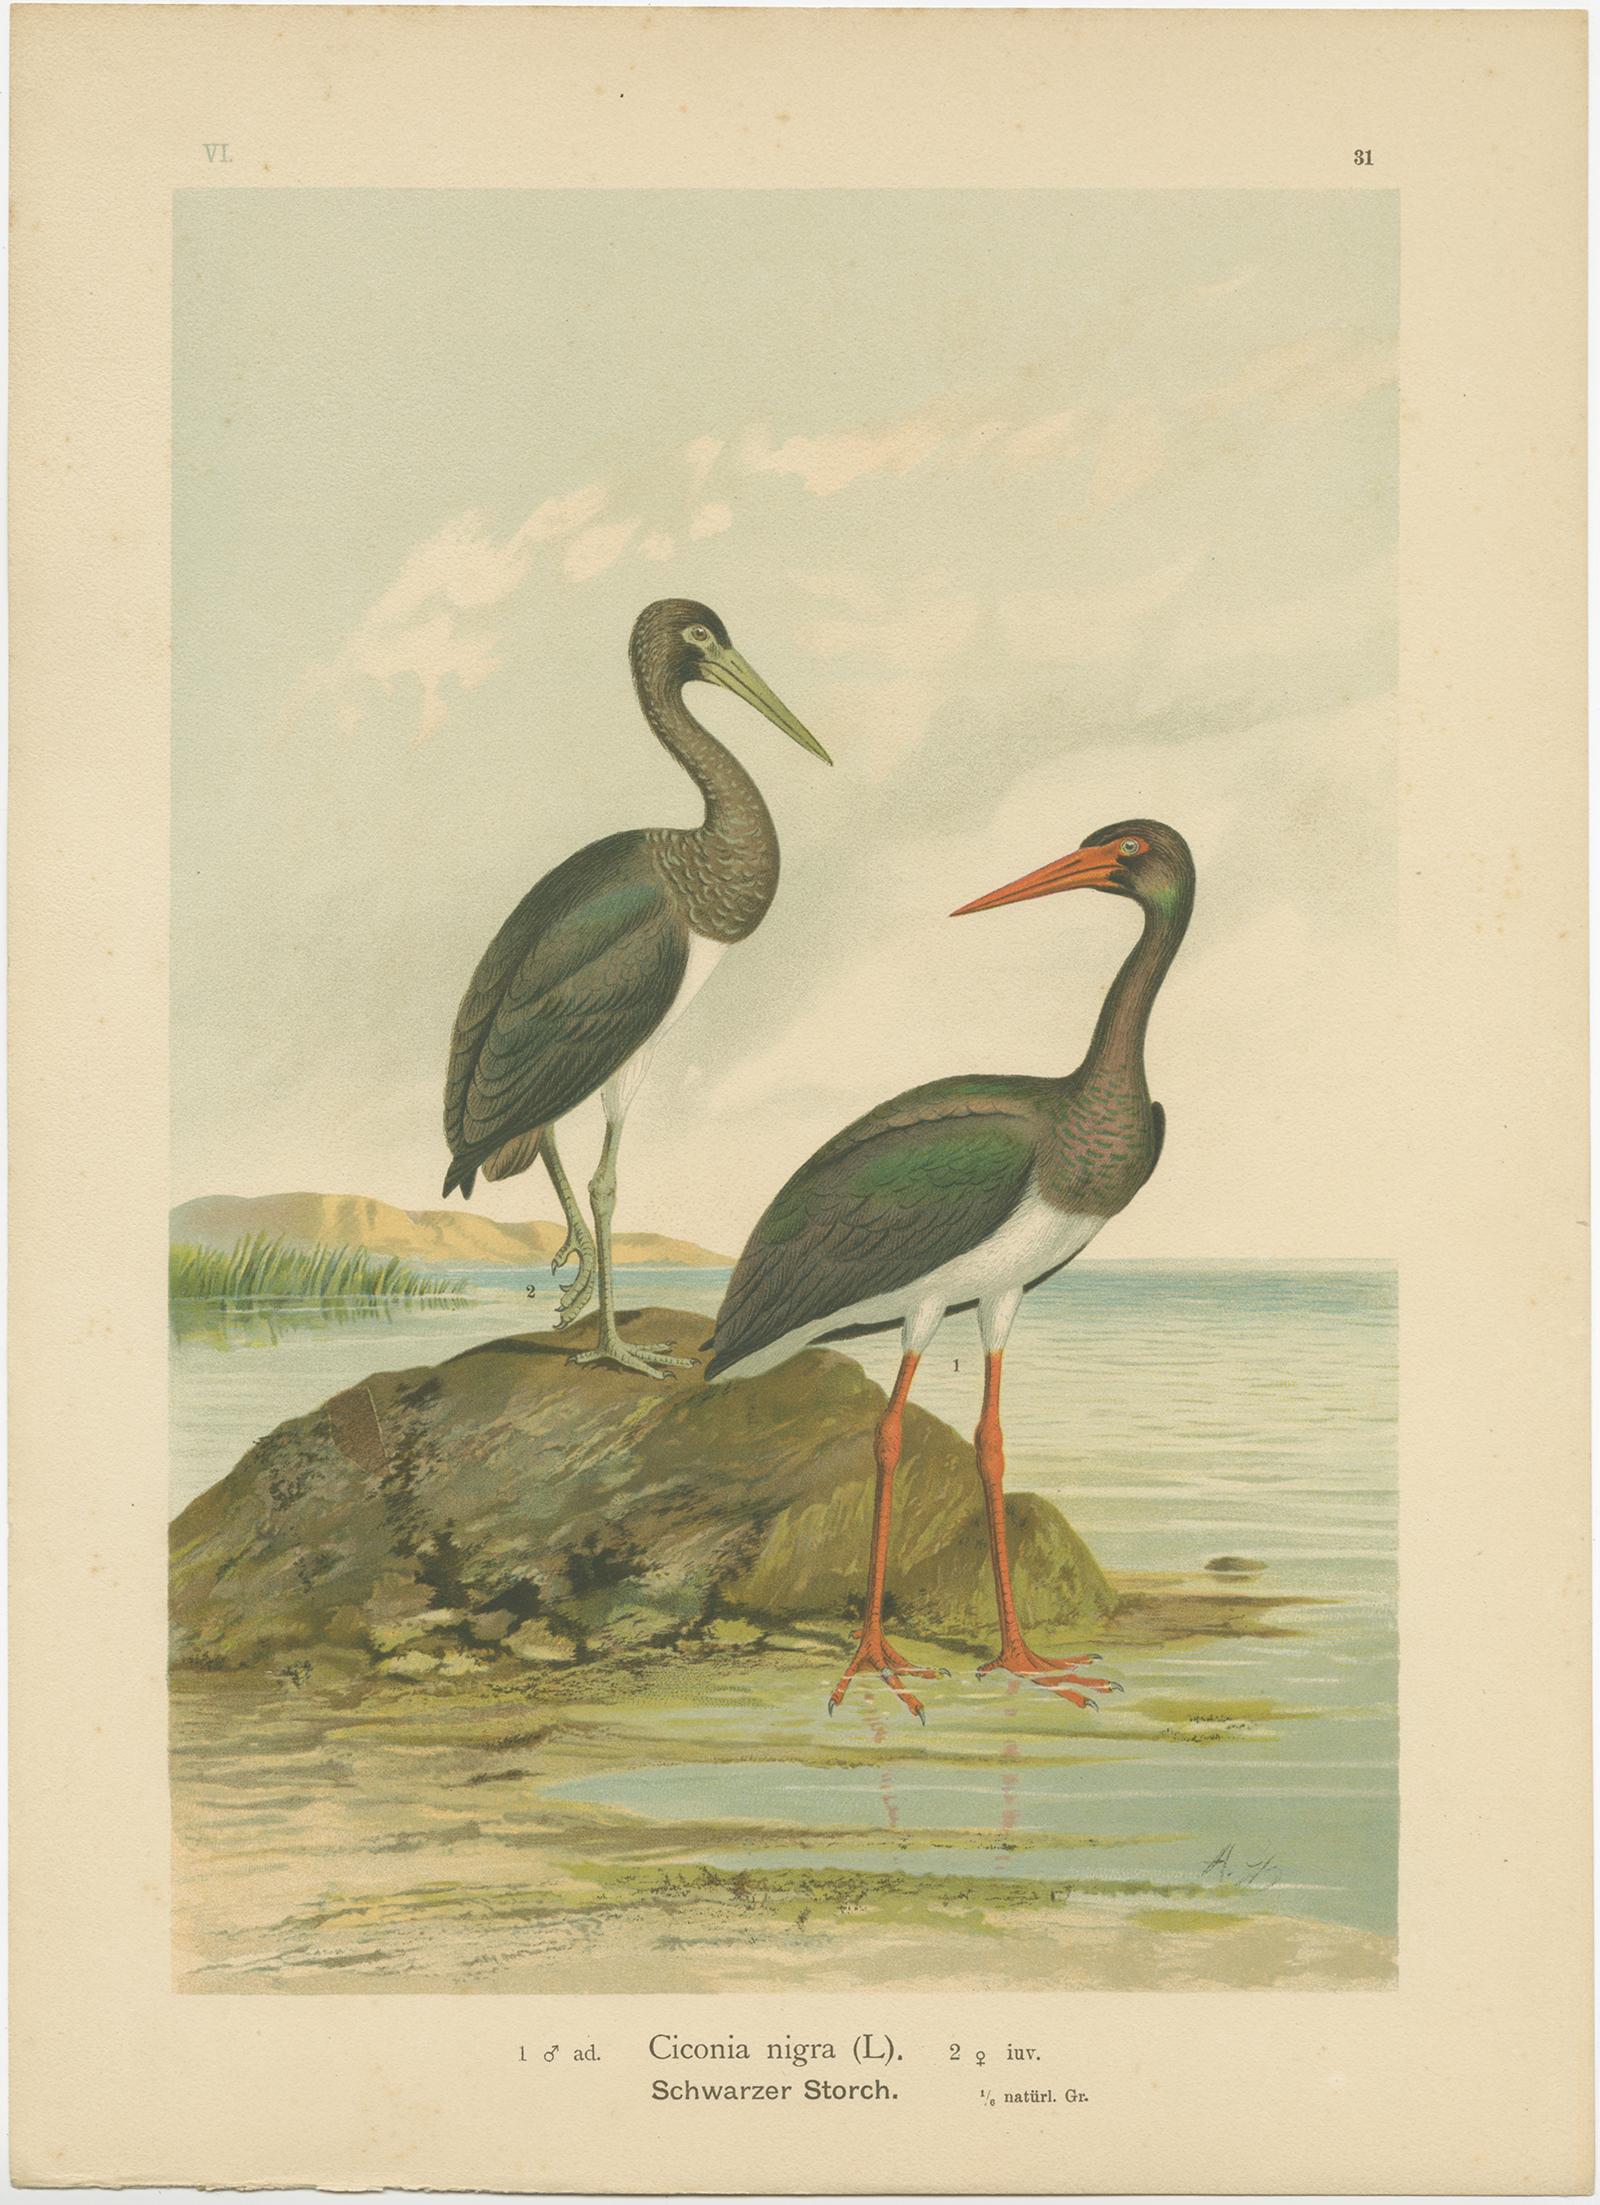 Antique bird print titled 'Ciconia Nigra - Schwarzer Strorch'. Chromolithograph of the Black Stork. This print originates from J.A. Naumann's 'Naturgeschichte der Vögel Mitteleuropas', published, circa 1895.